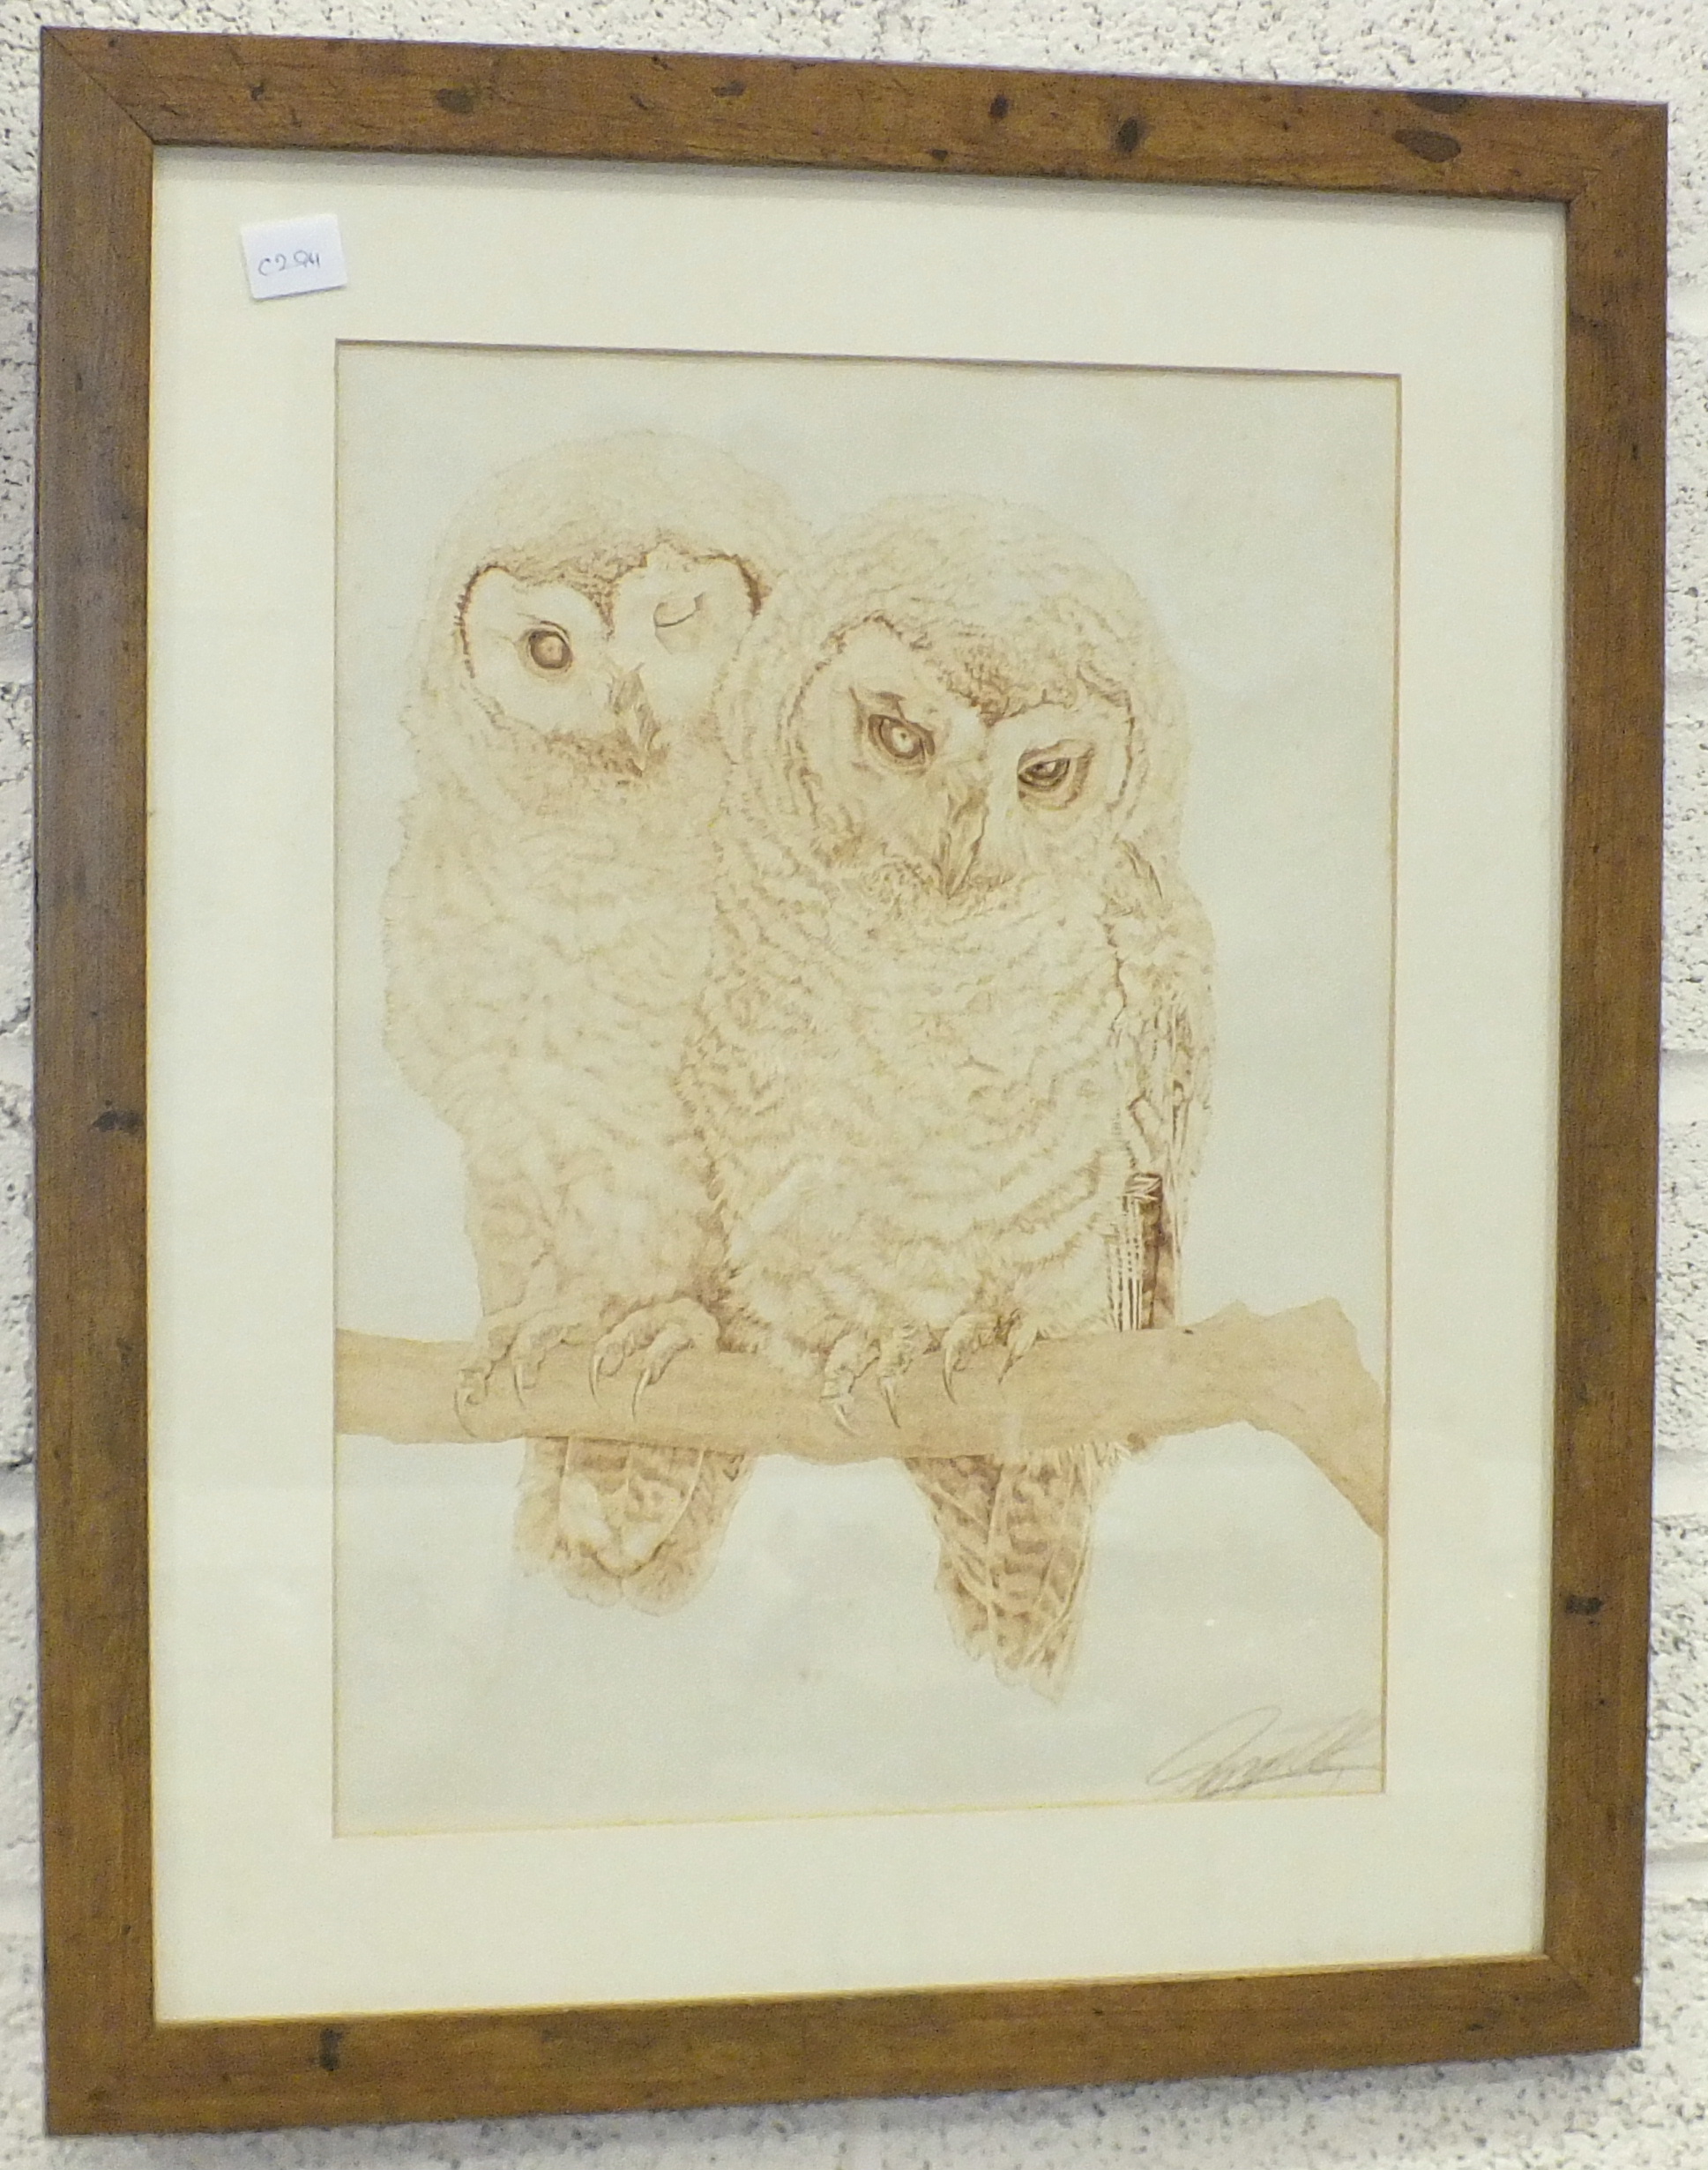 Chris Rahm?, 'Study of an owl', unframed gouache and crayon, 30 x 20cm, after Tony Ladd, 'Owl - Bild 3 aus 3